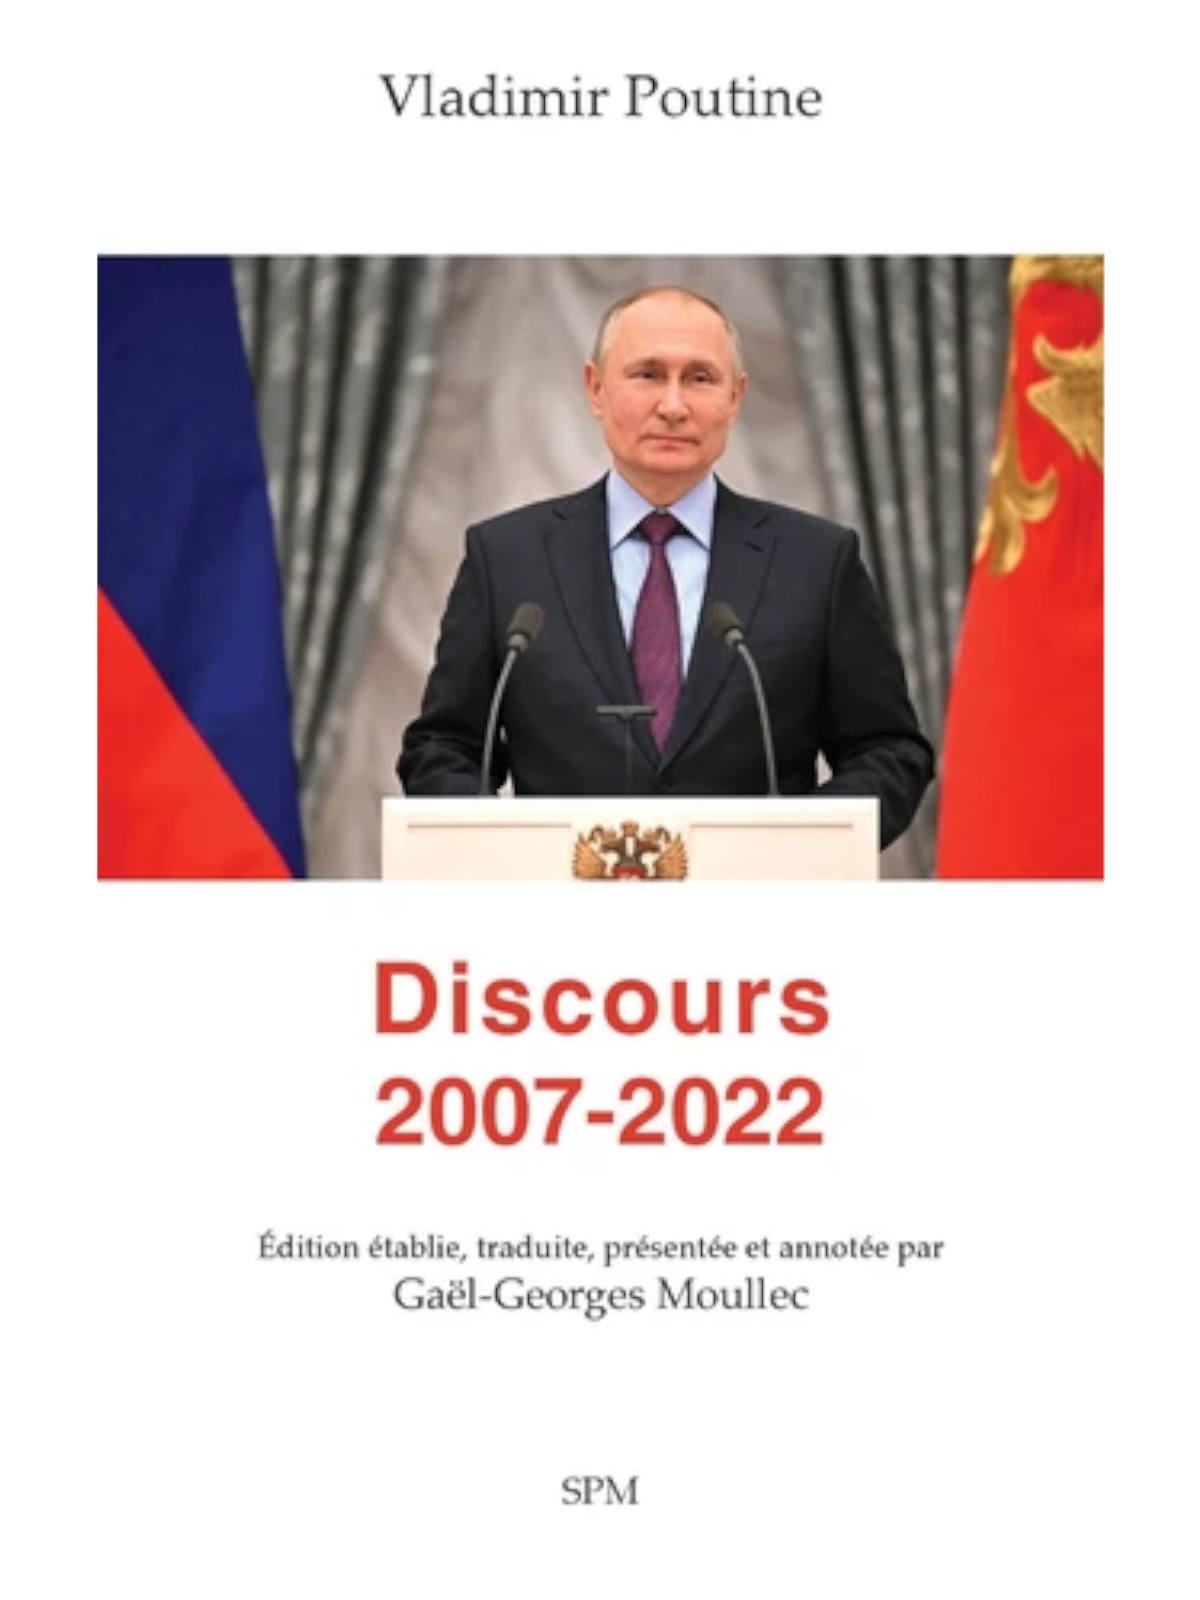 Gaël-Georges Moullec : Vladimir Poutine. Discours 2007-2022